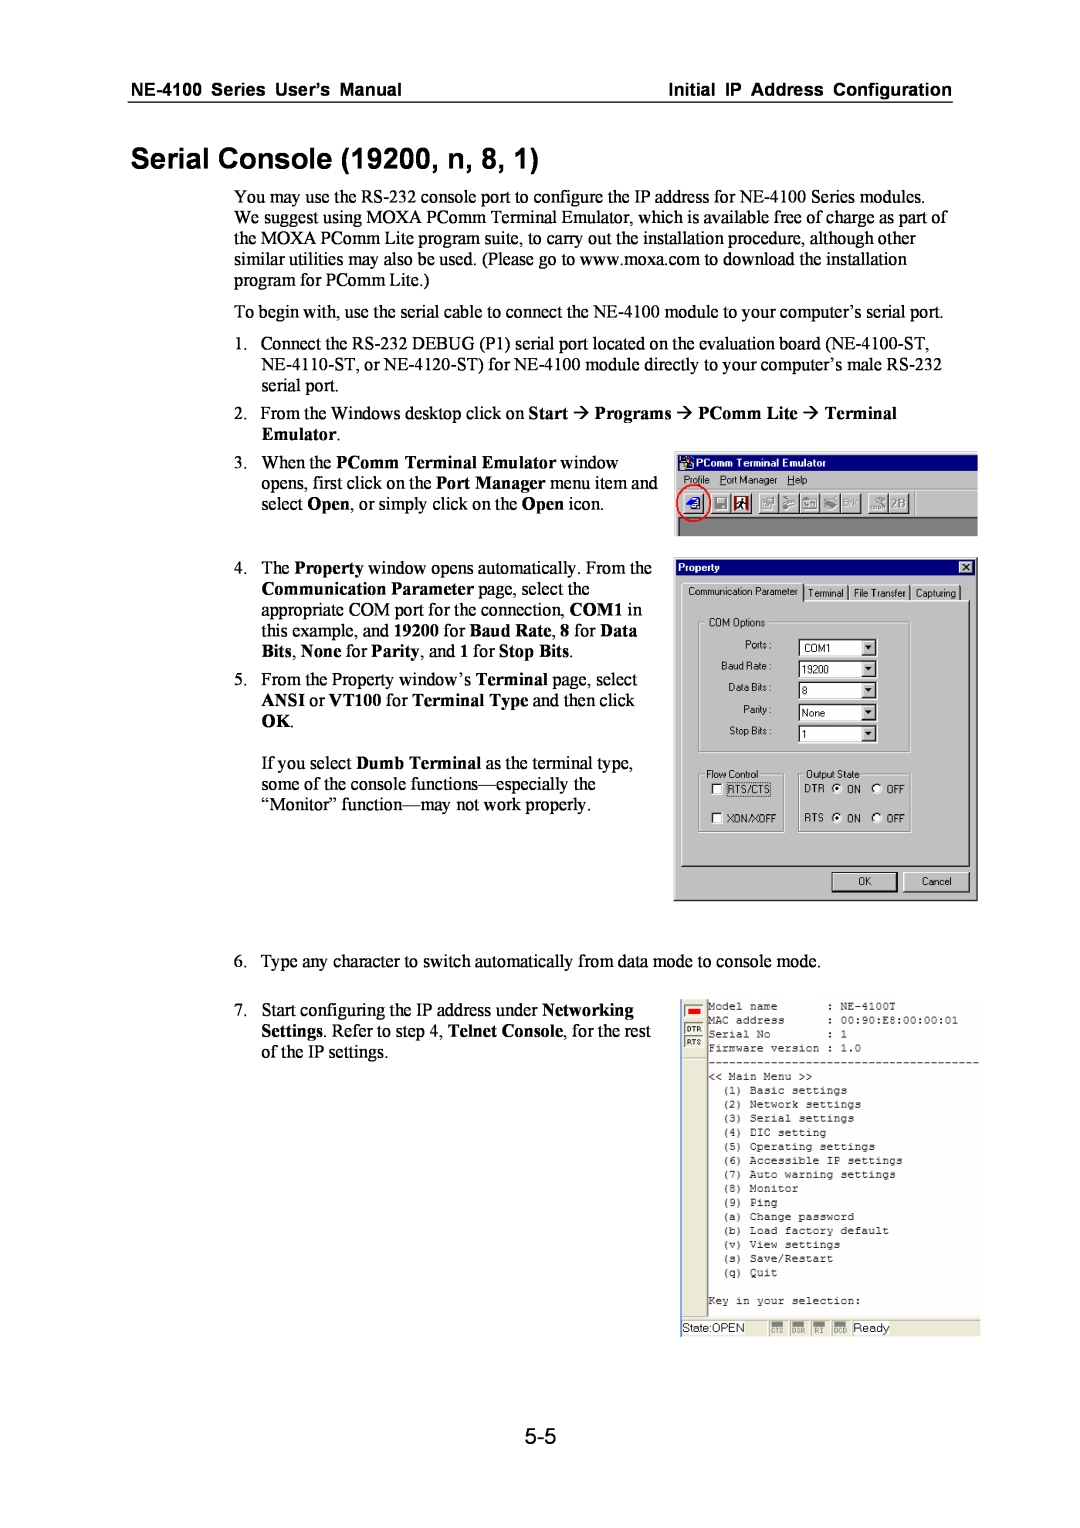 Moxa Technologies user manual Serial Console 19200, n, 8, NE-4100 Series User’s Manual, Initial IP Address Configuration 